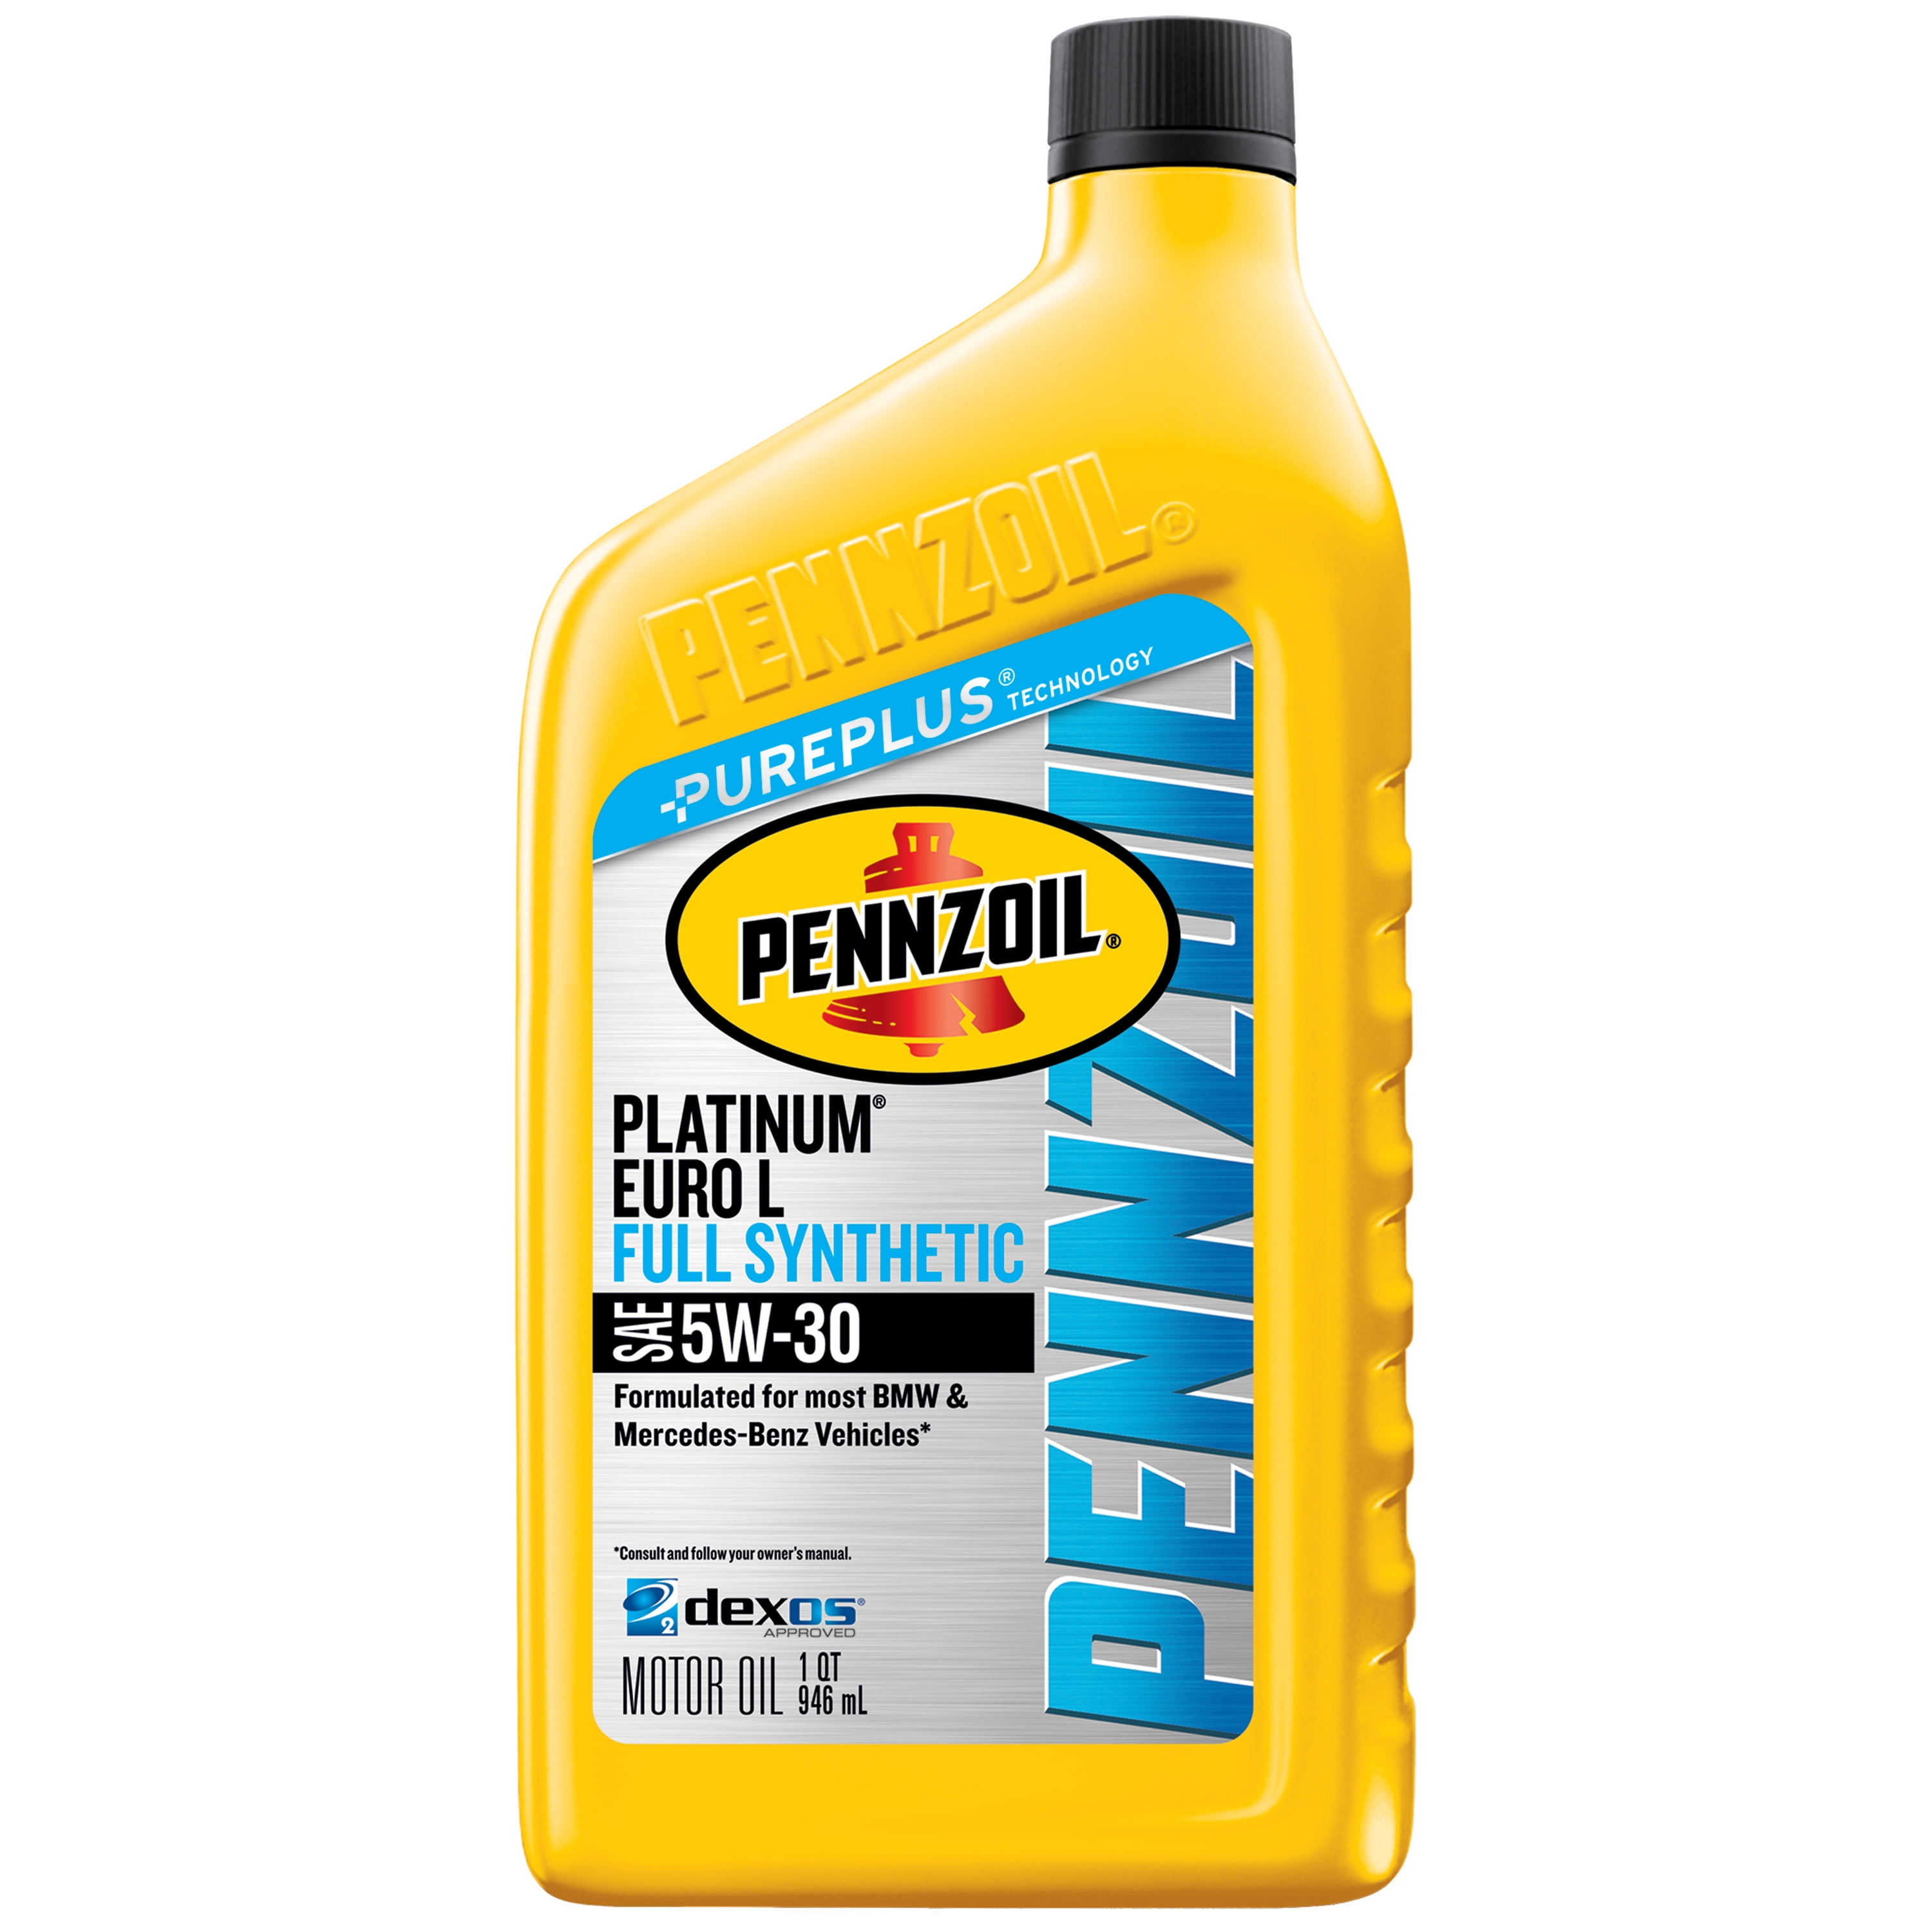 pennzoil-platinum-euro-5w-30-full-synthetic-motor-oil-1-qt-walmart